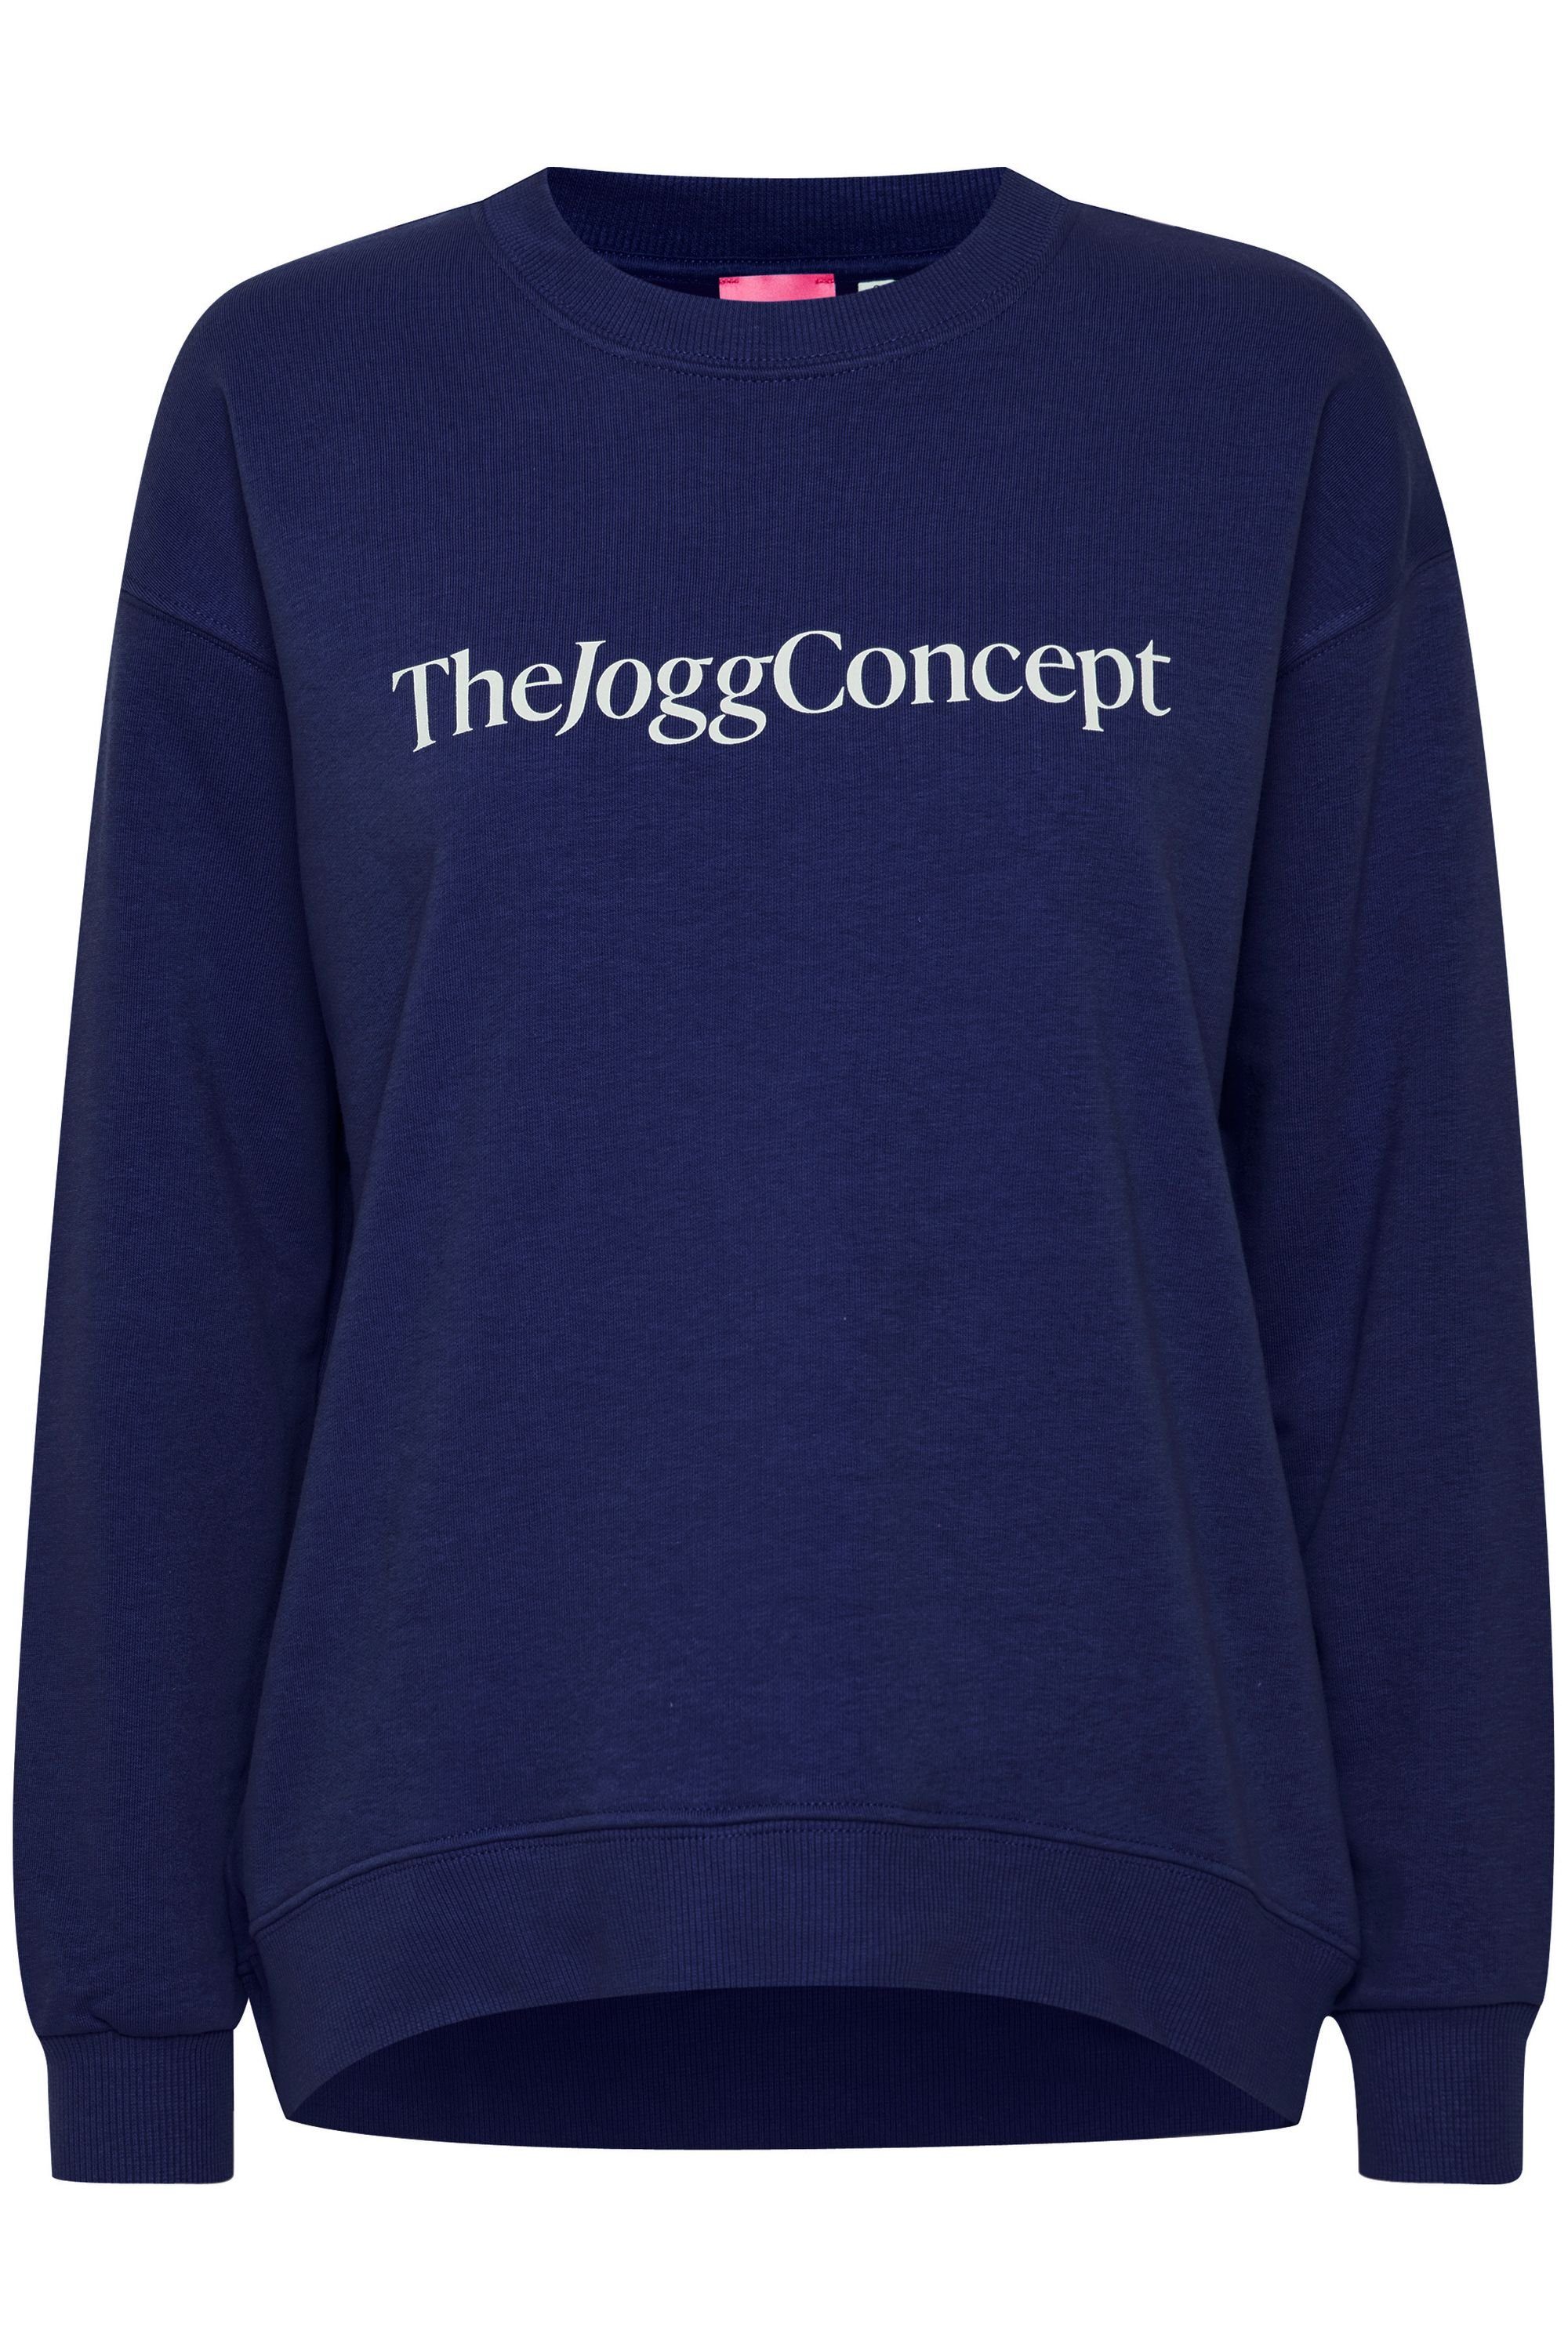 JCSAFINE TheJoggConcept. Blue (193933) - SWEATSHIRT Medieval 22800015 Sweatshirt